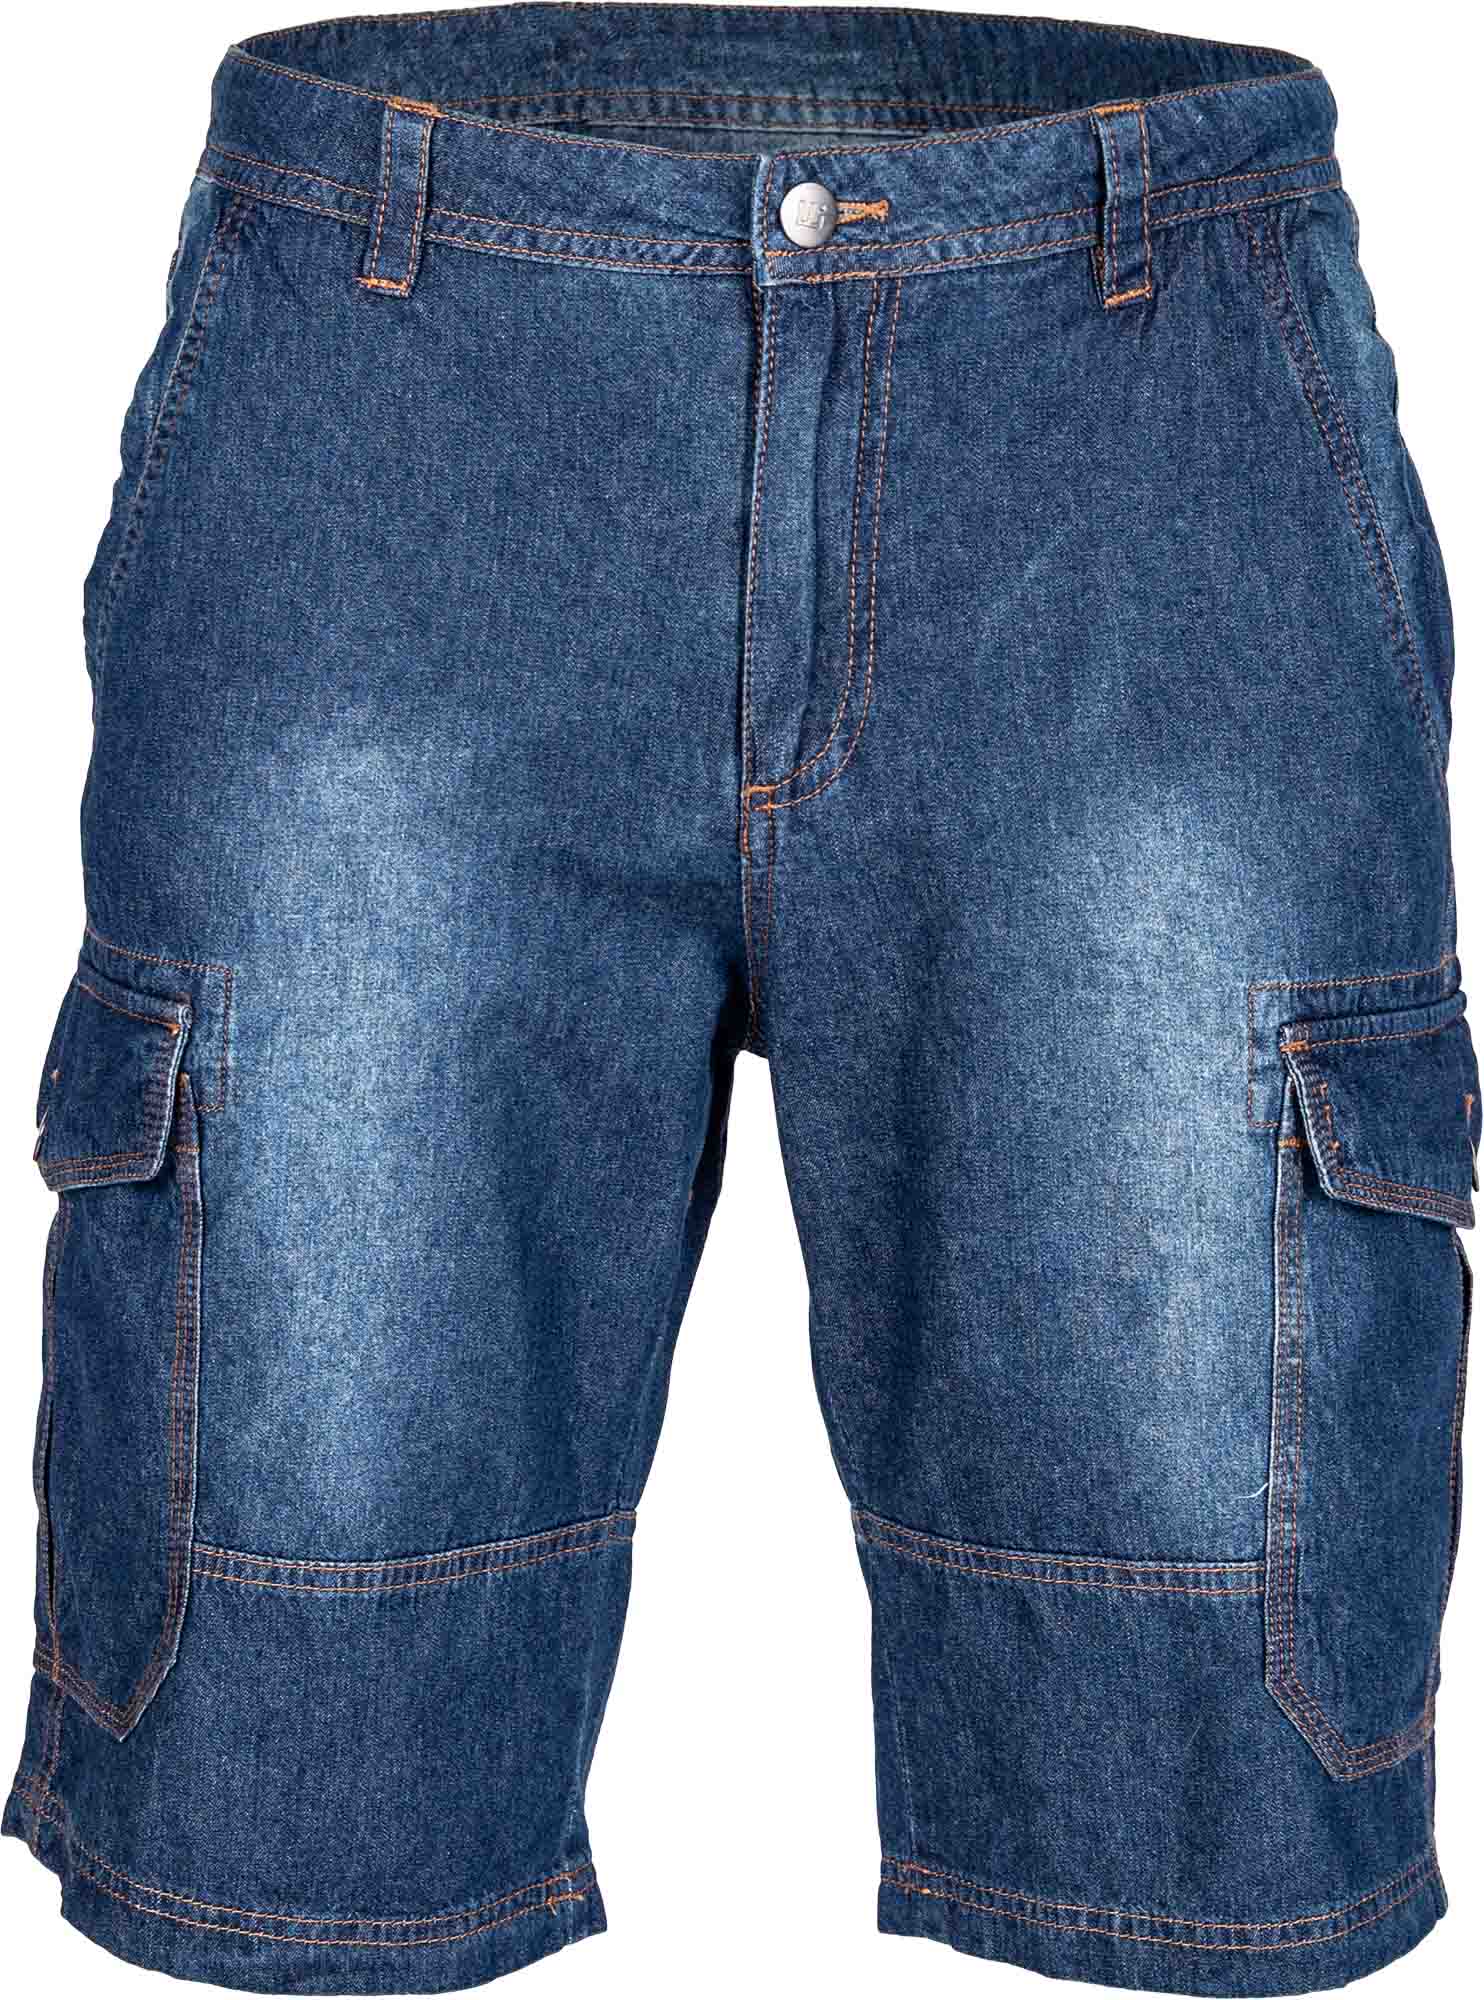 Pánské džínové šortky